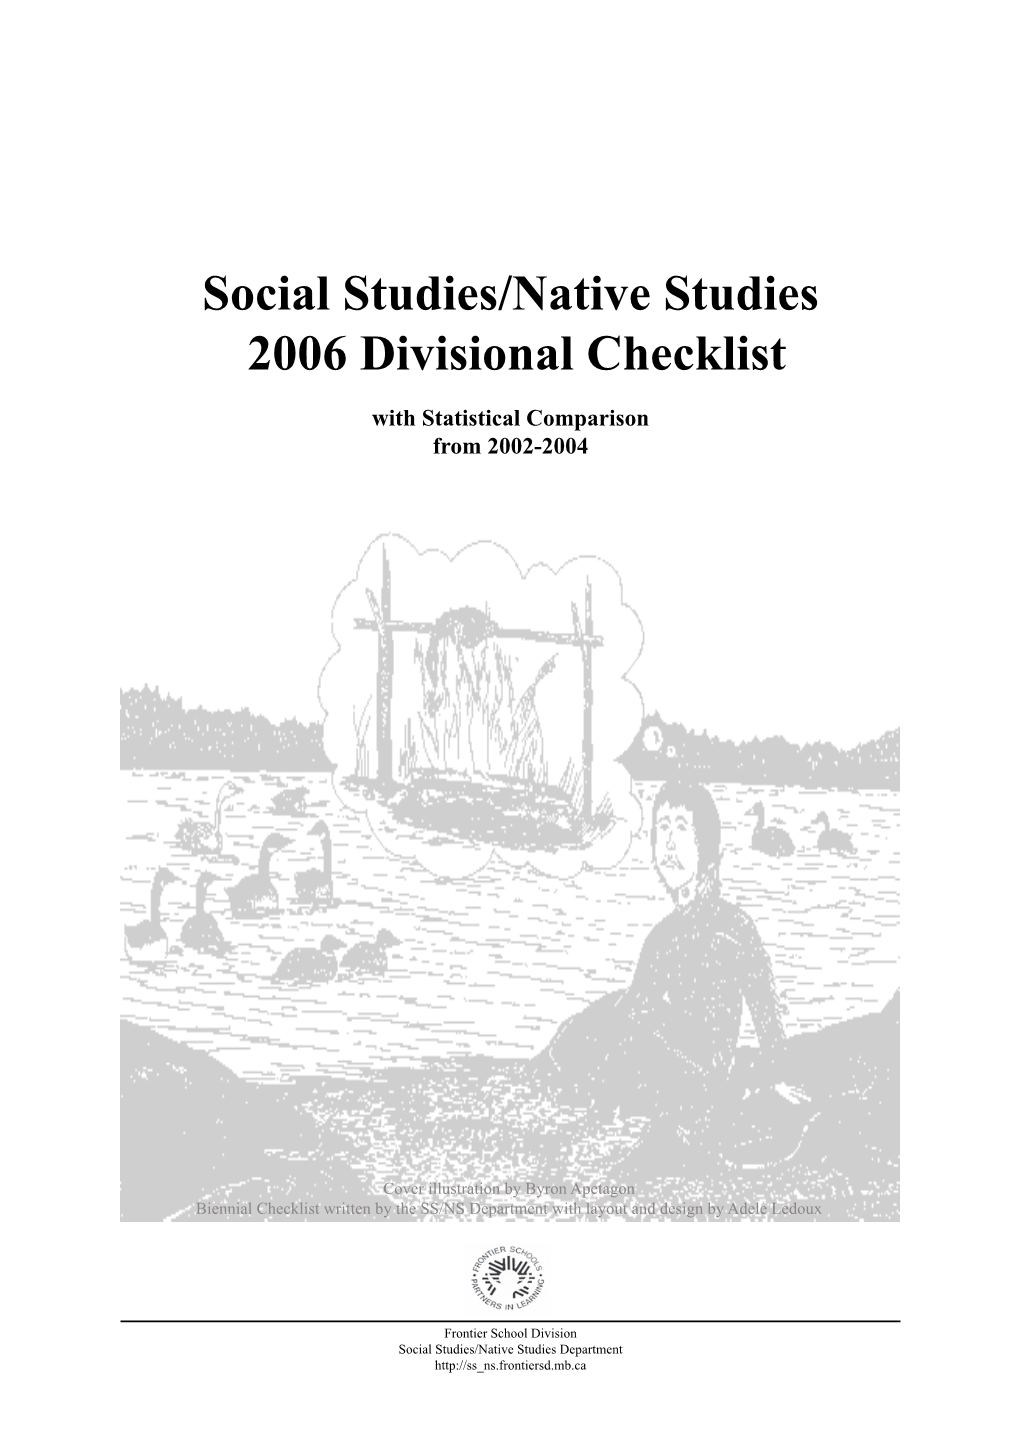 Social Studies/Native Studies 2006 Divisional Checklist